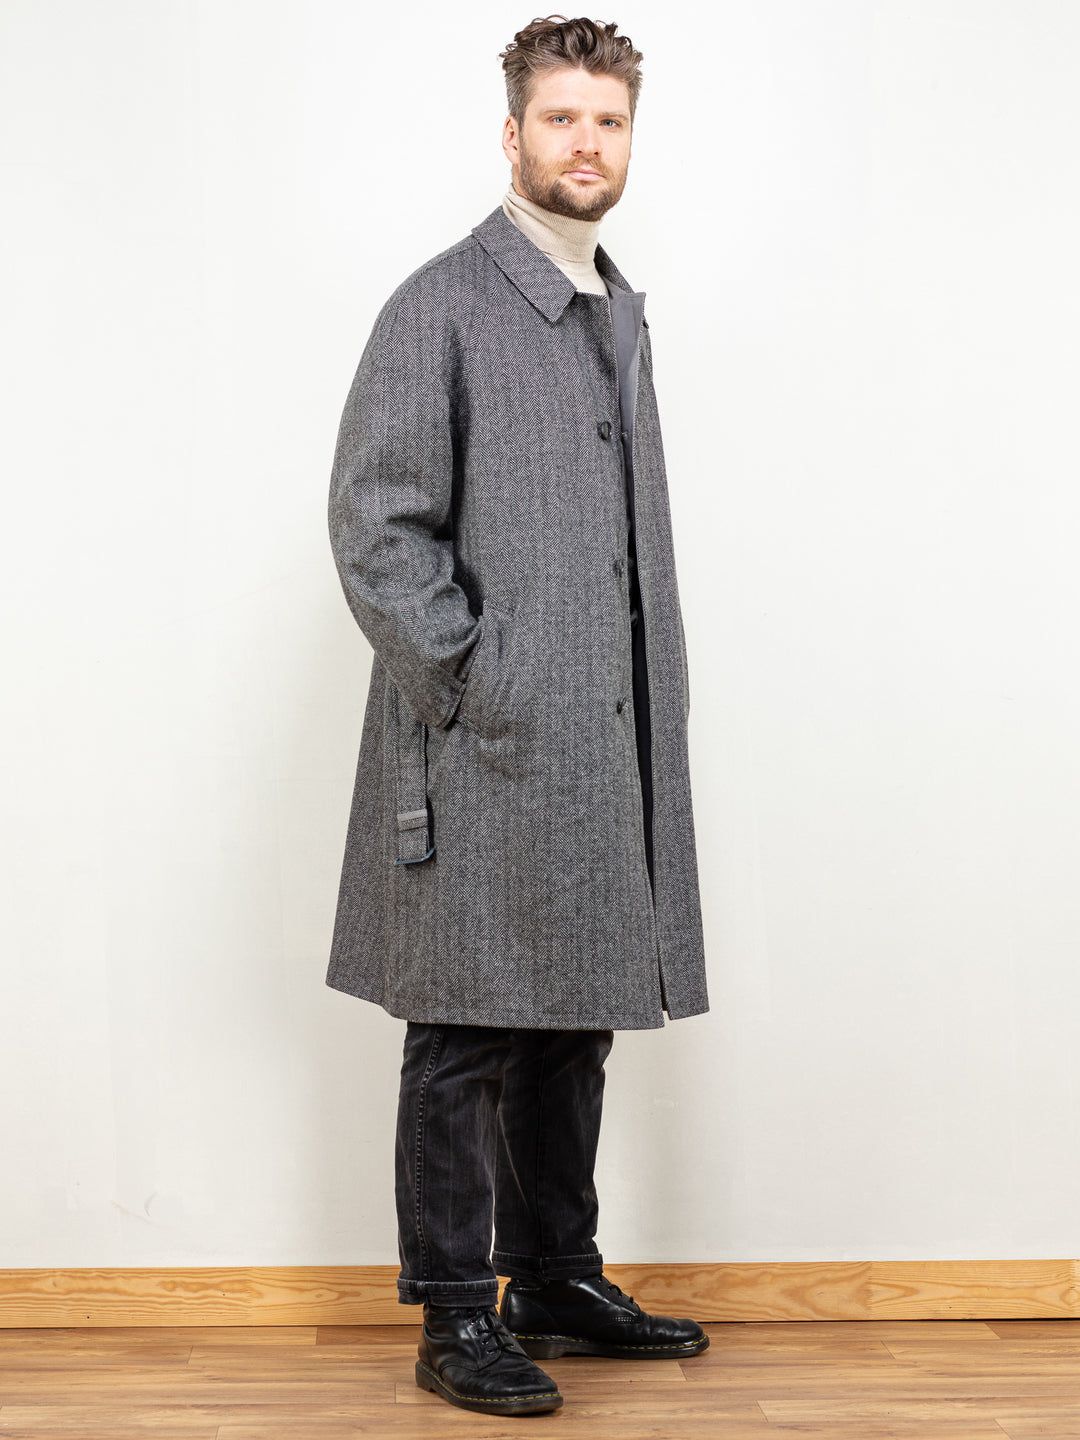 Men Wool Coat 80s grey wool blend overcoat classy vintage men coat 80s classic men minimalistic preppy style outerwear size extra large XL